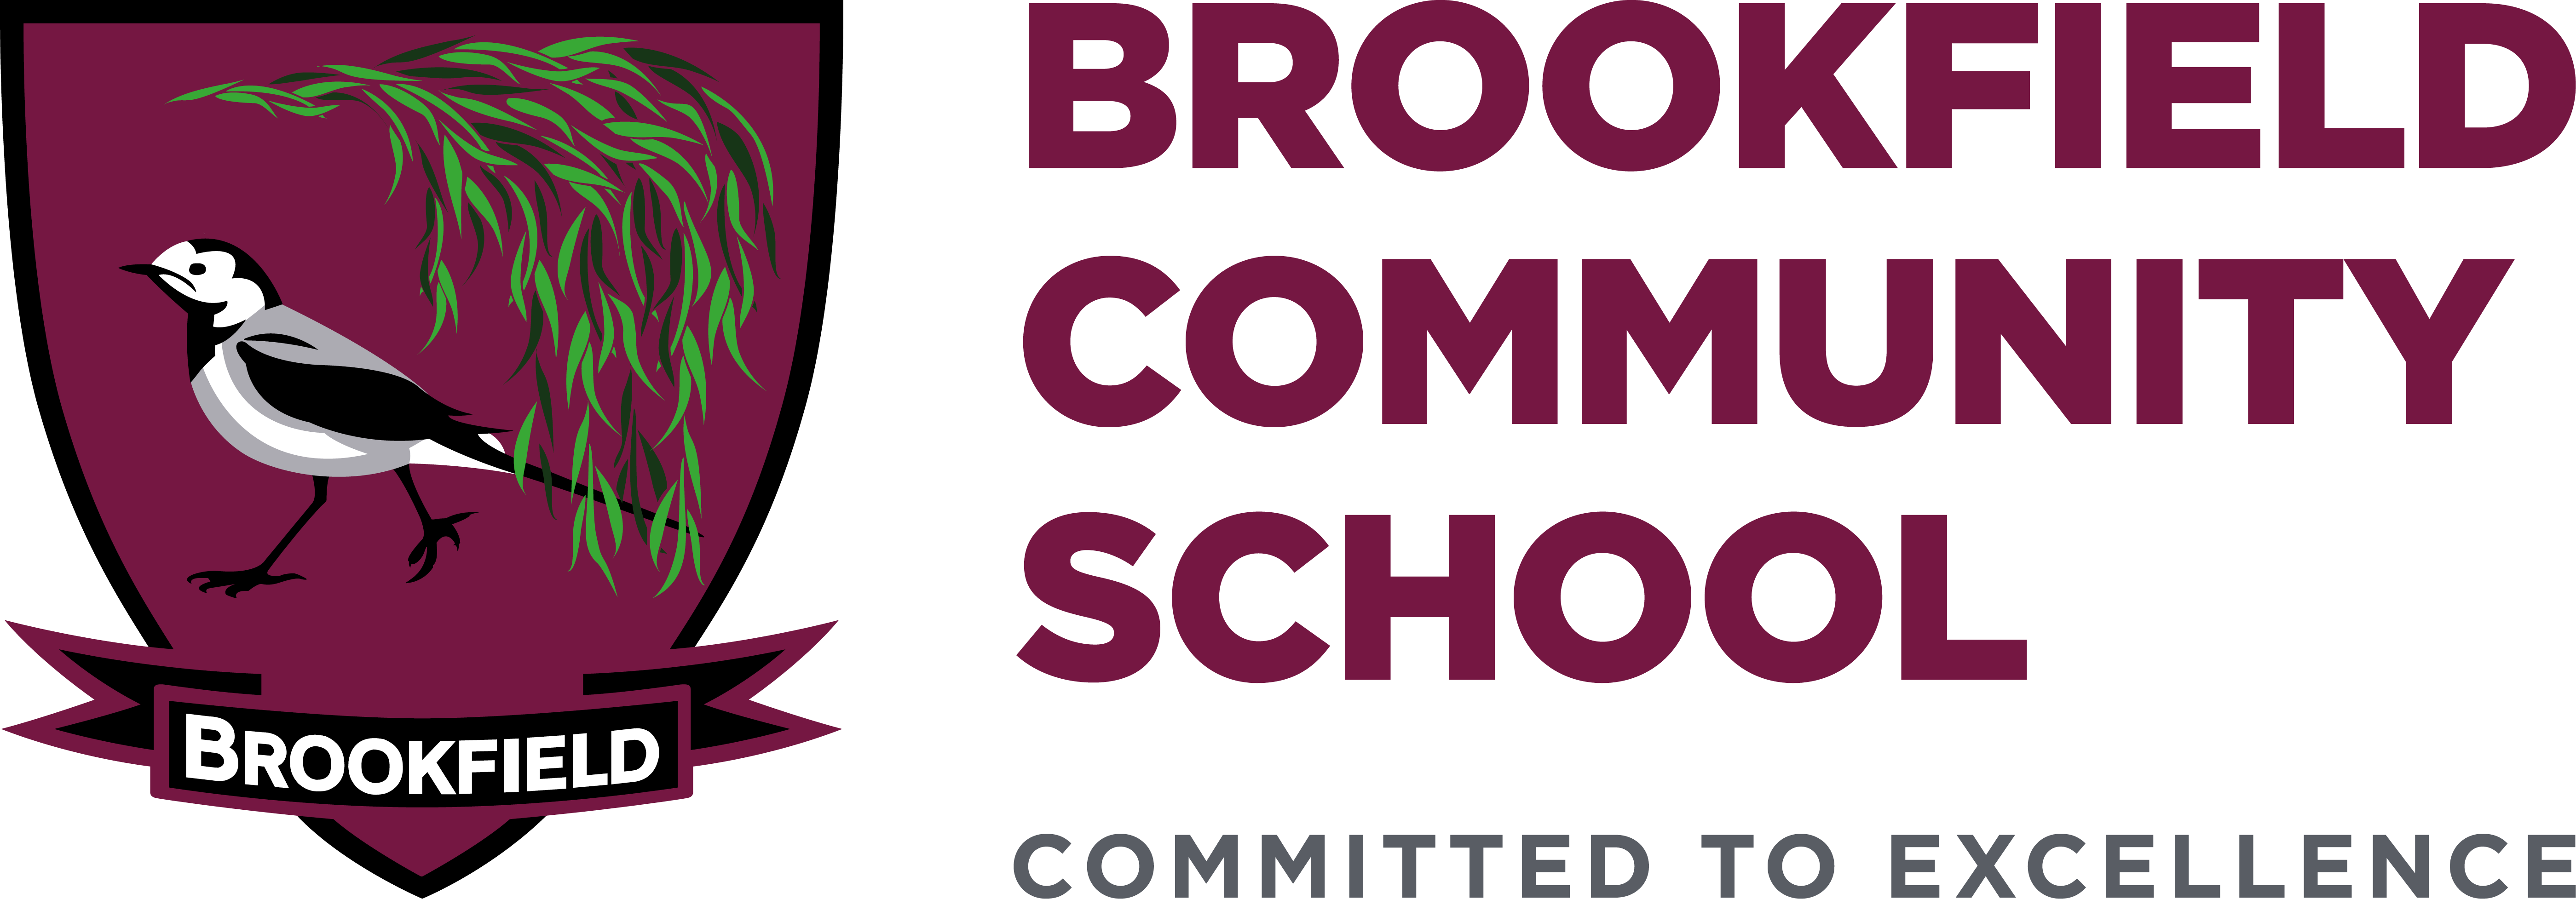 Brookfield Community School